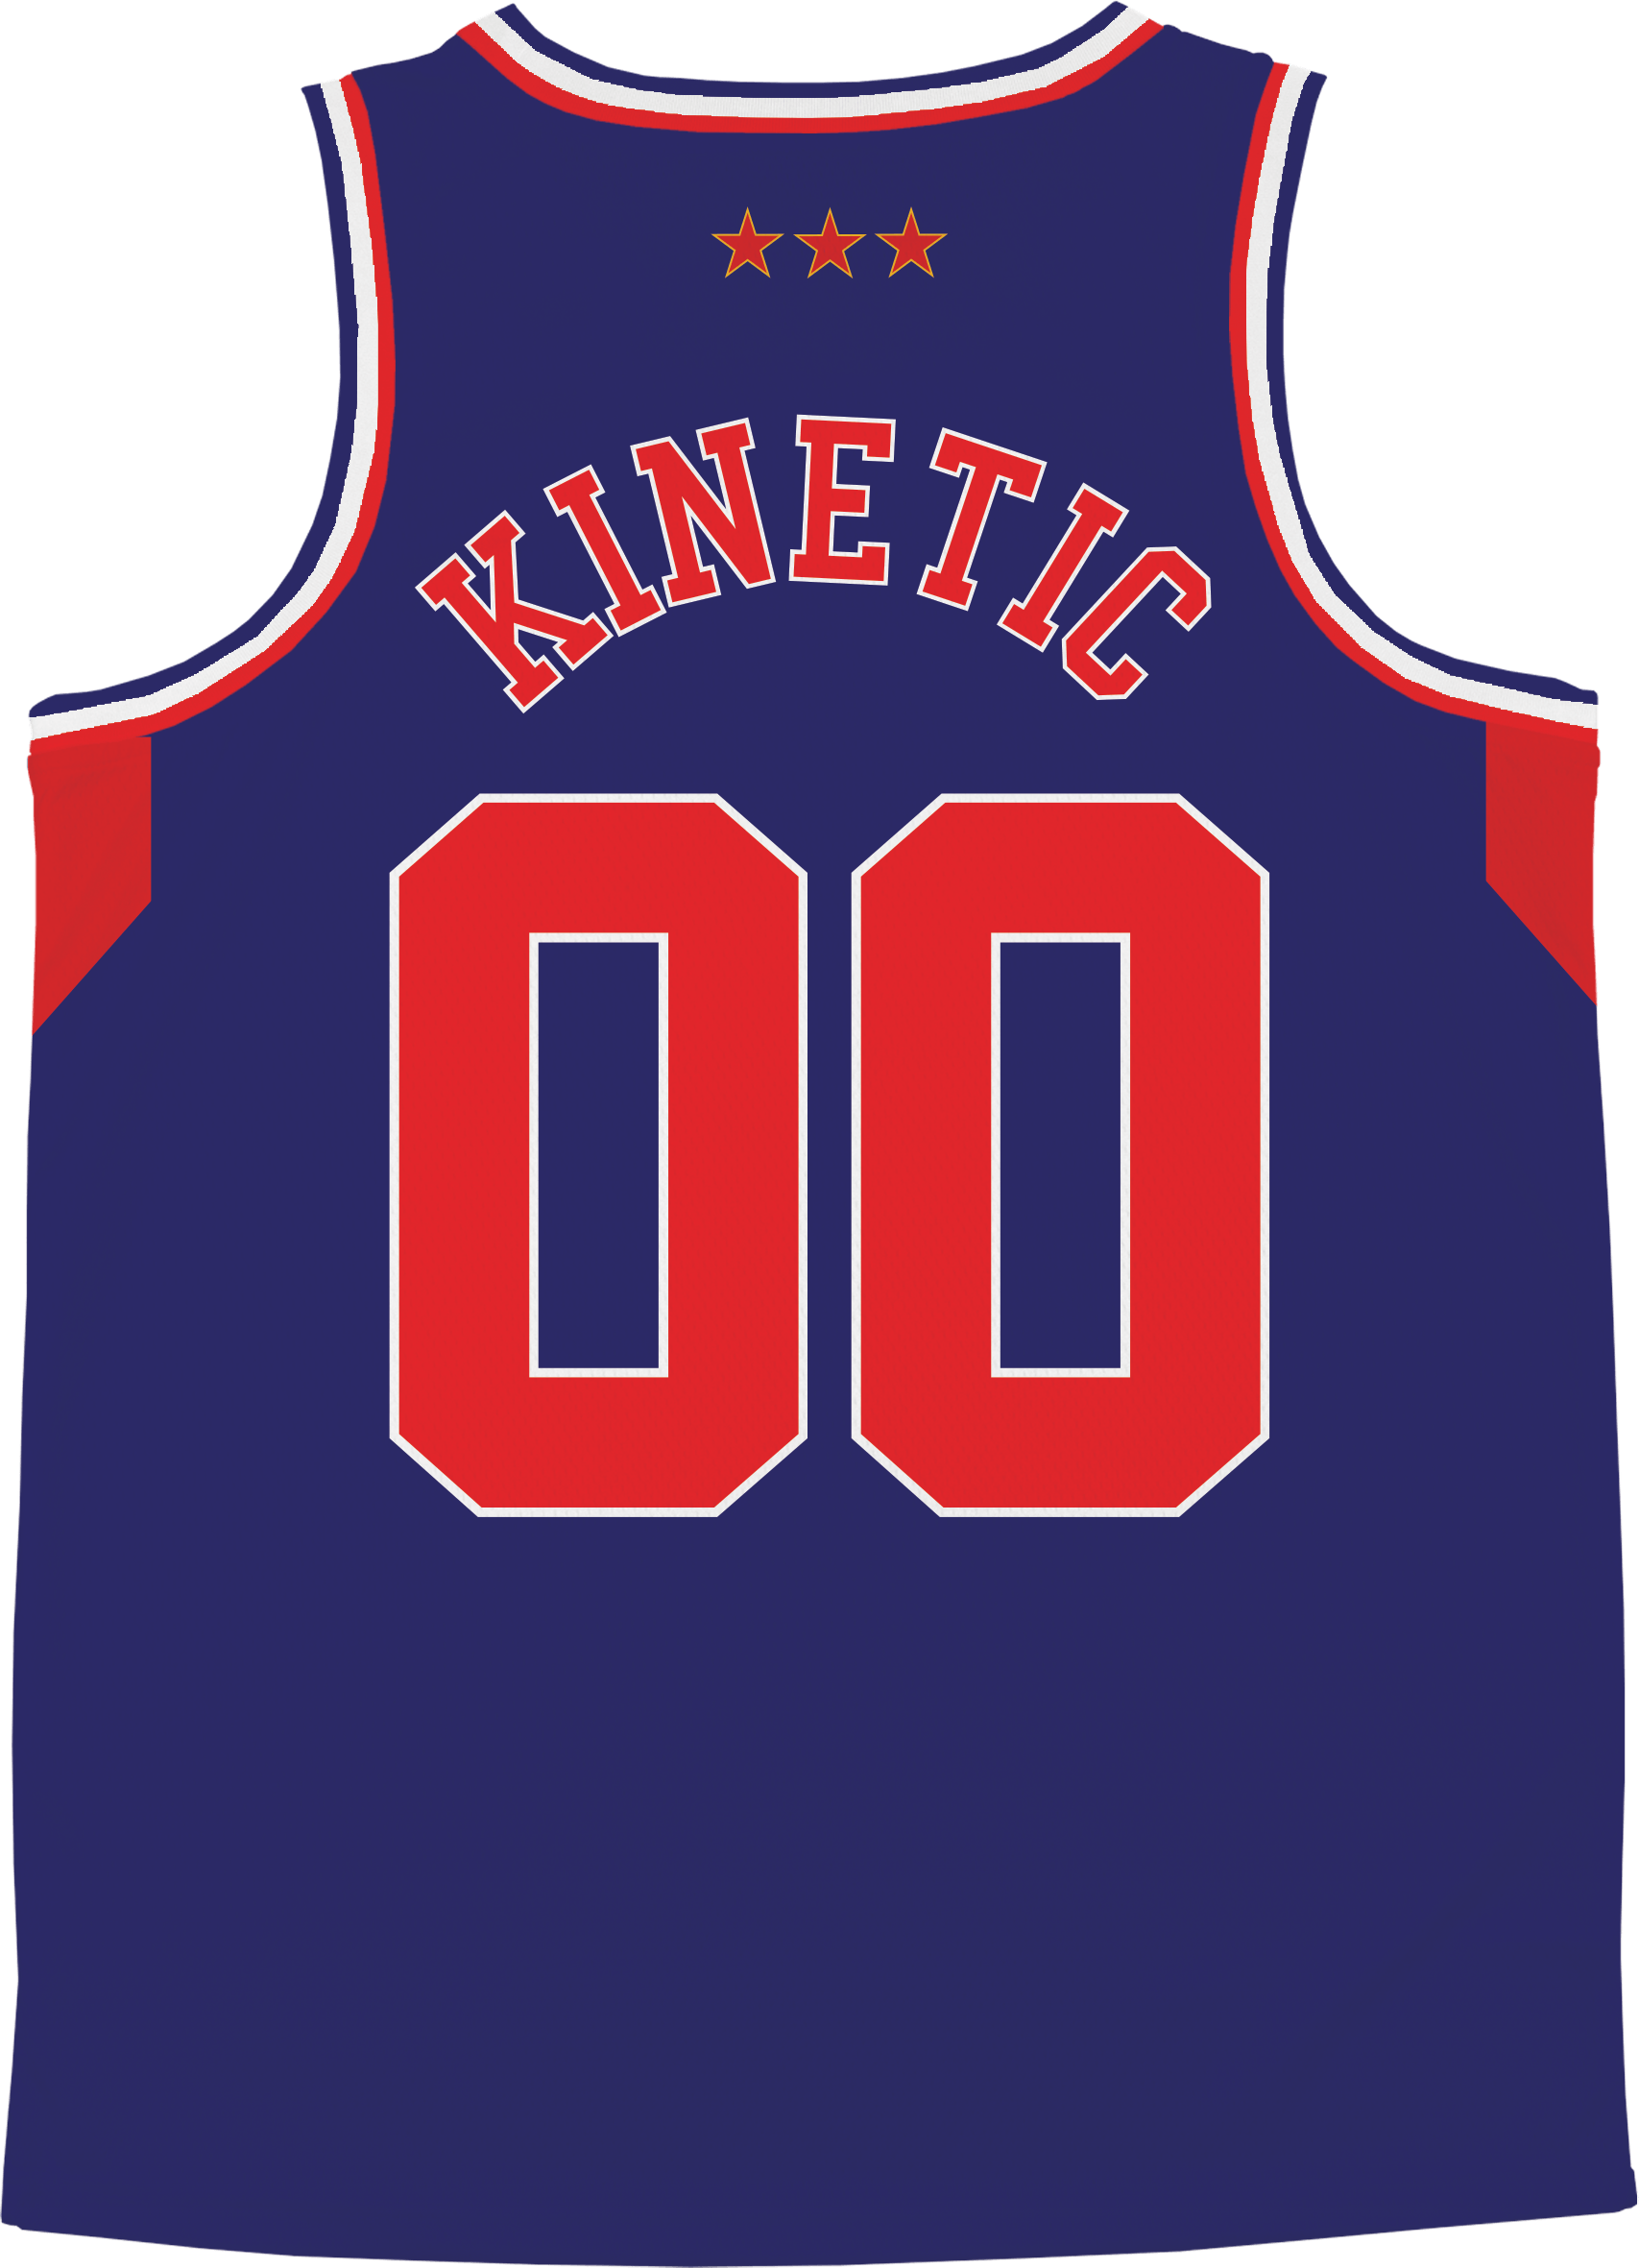 Kappa Delta Rho - Retro Ballers Basketball Jersey - Kinetic Society